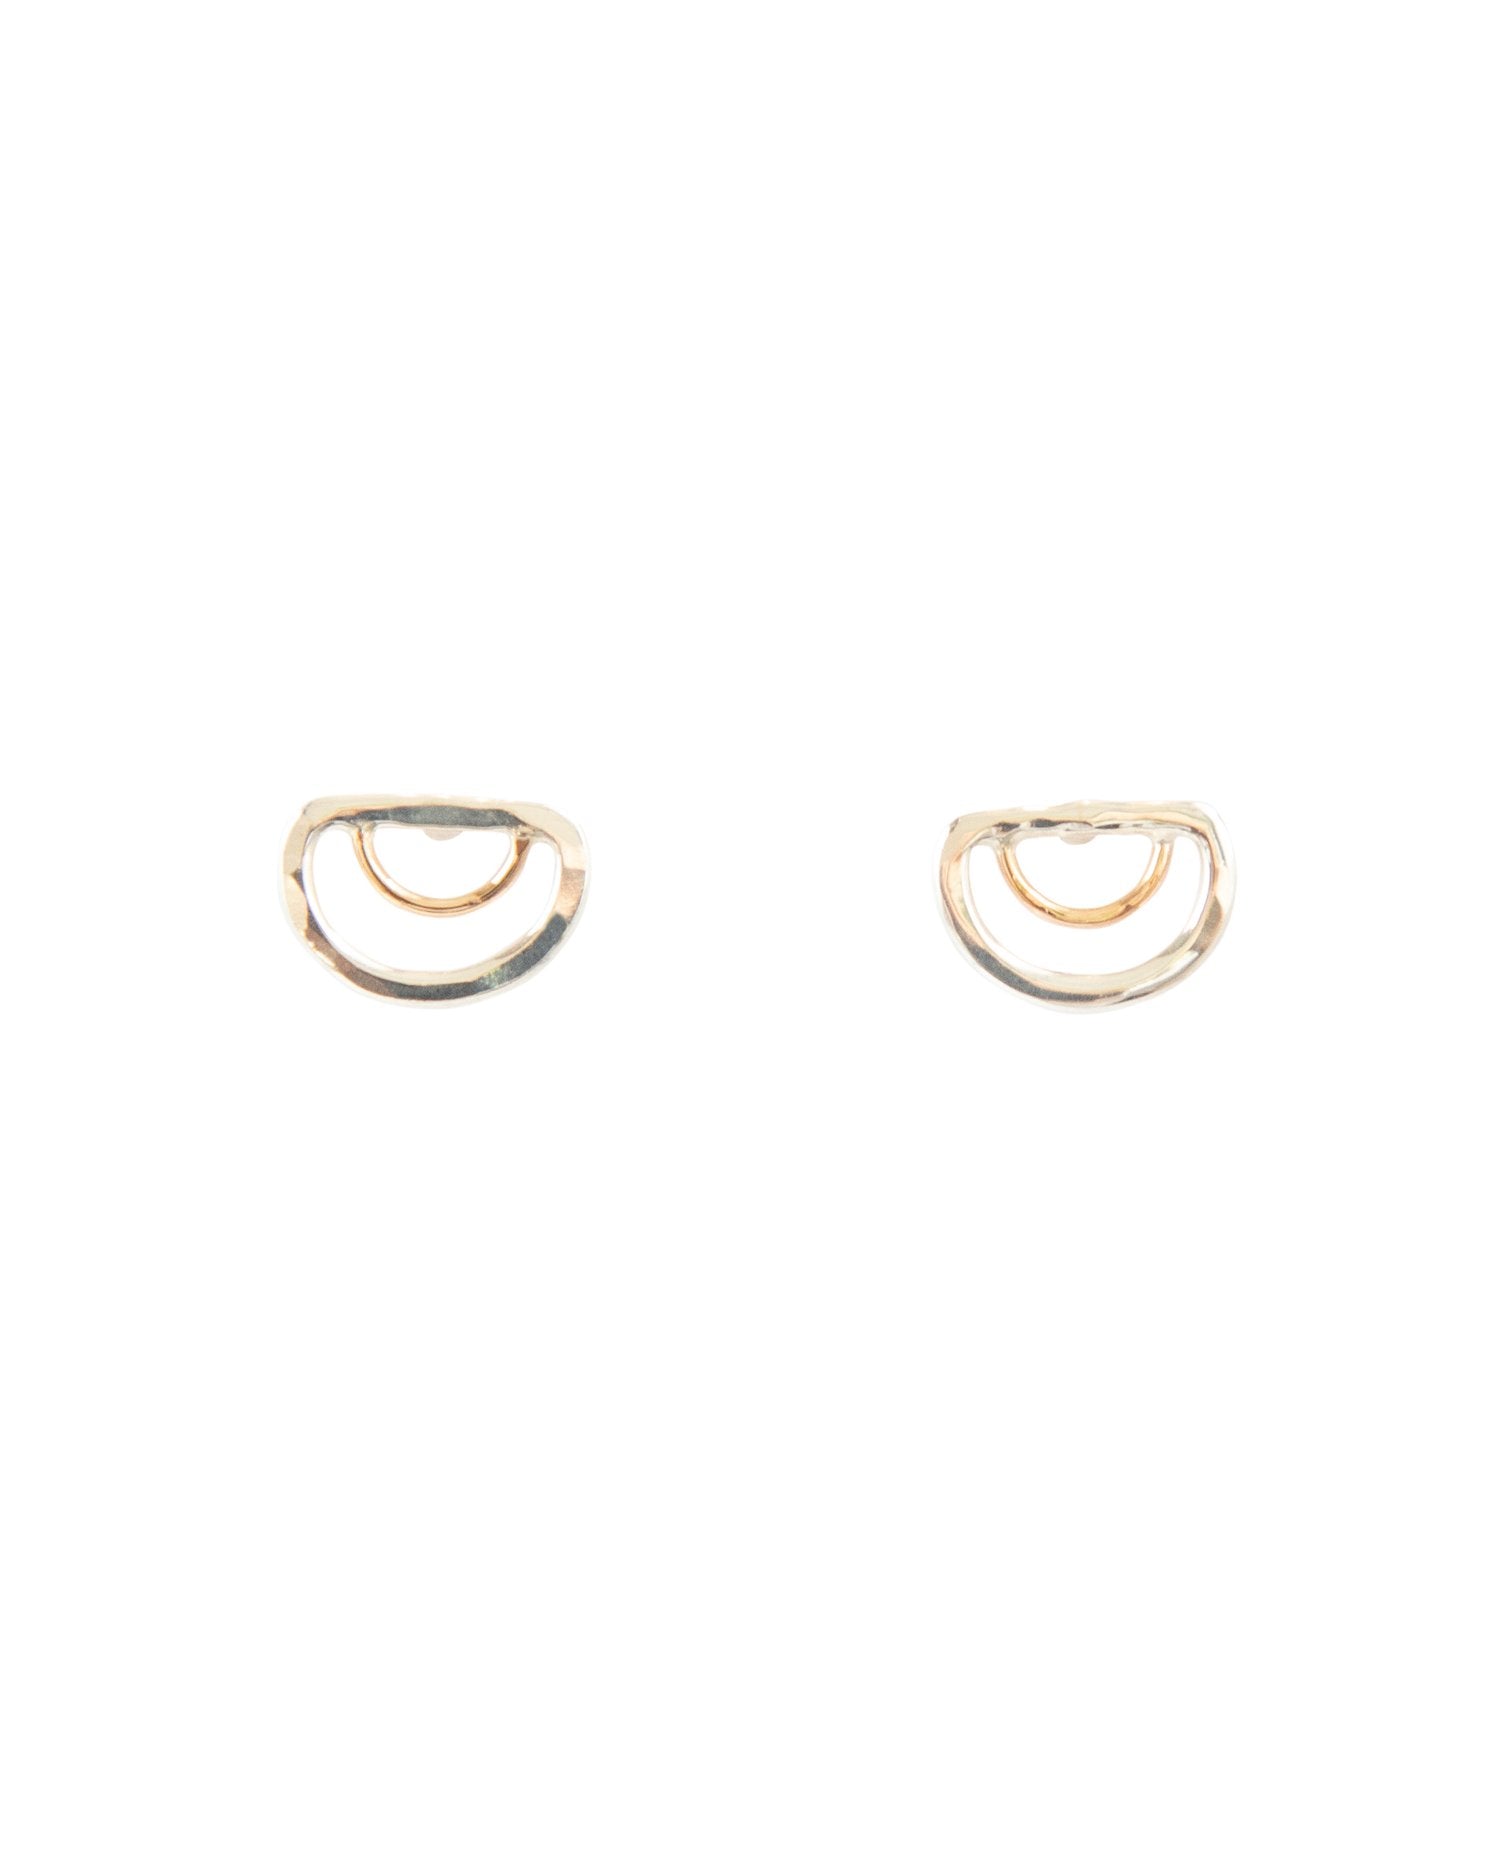 SUN & SELENE handcrafted arc earrings